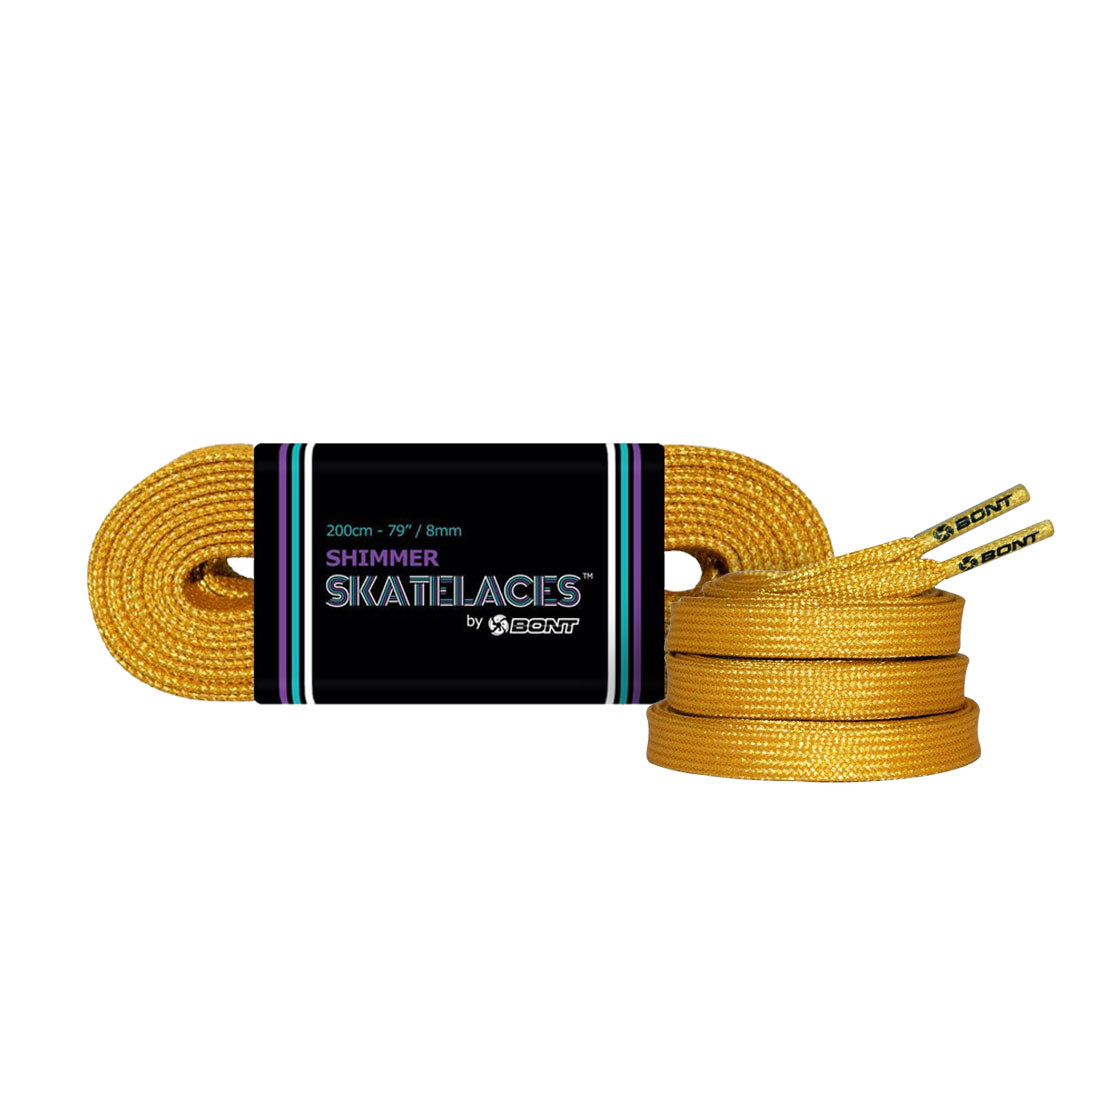 Bont Shimmer 8mm Laces - 200cm/79in Honey Gold Laces